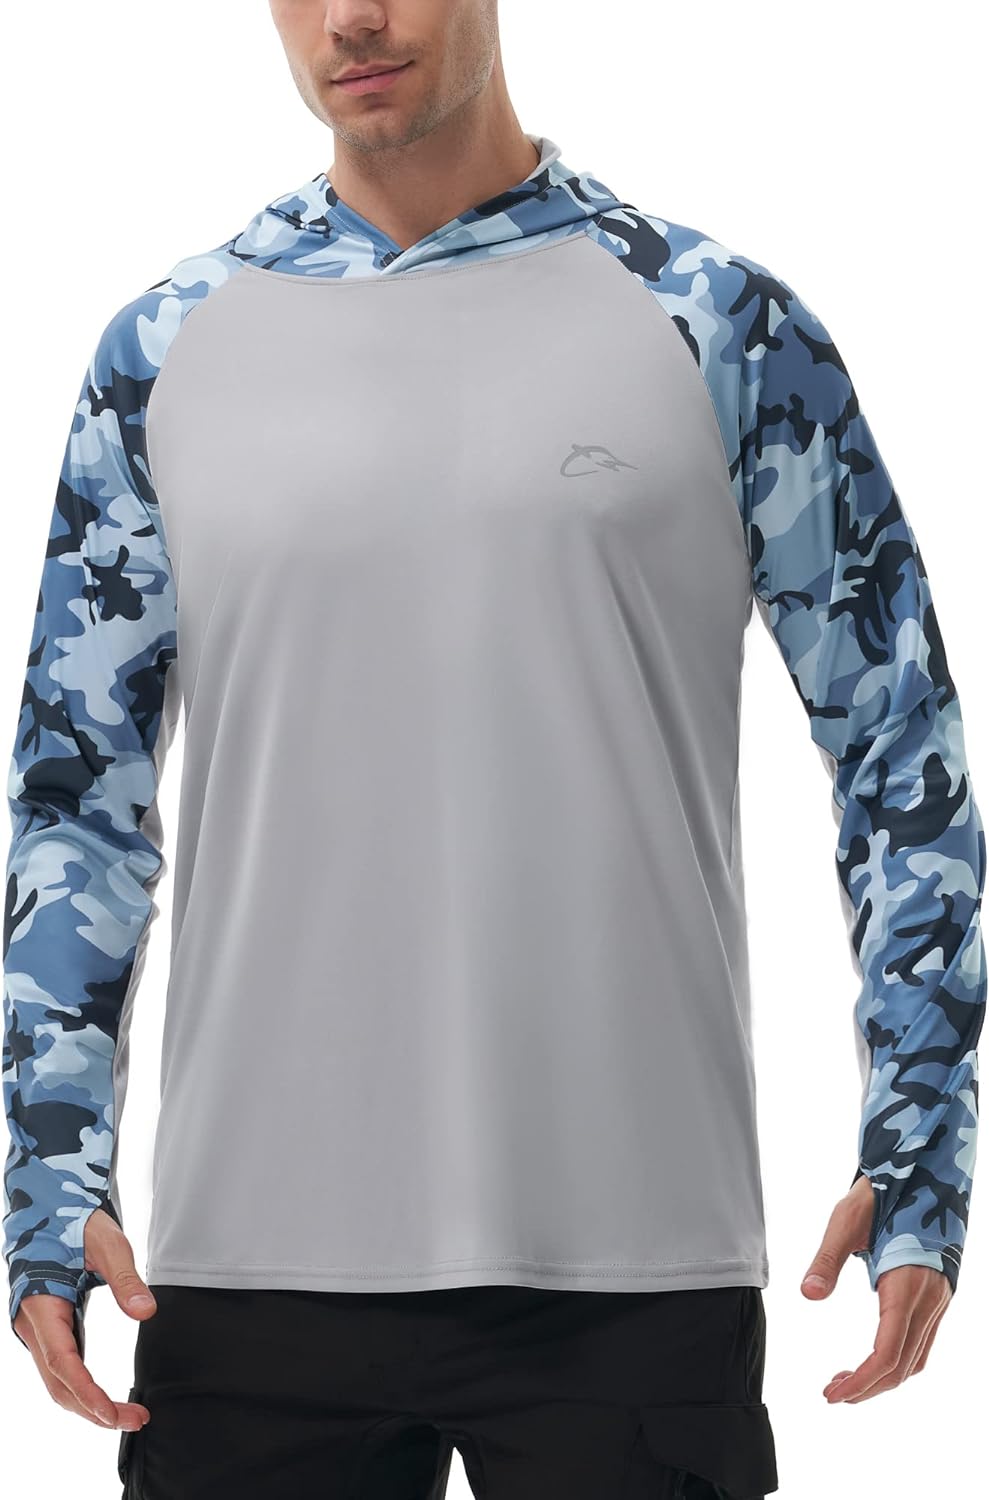 FISHEAL Men's Performance Fishing Hoodie Shirt - UPF 50+ Camo Long Sleeve  Thumbholes Shirts with Mesh Face Mask Sparkling Blue Camo Large